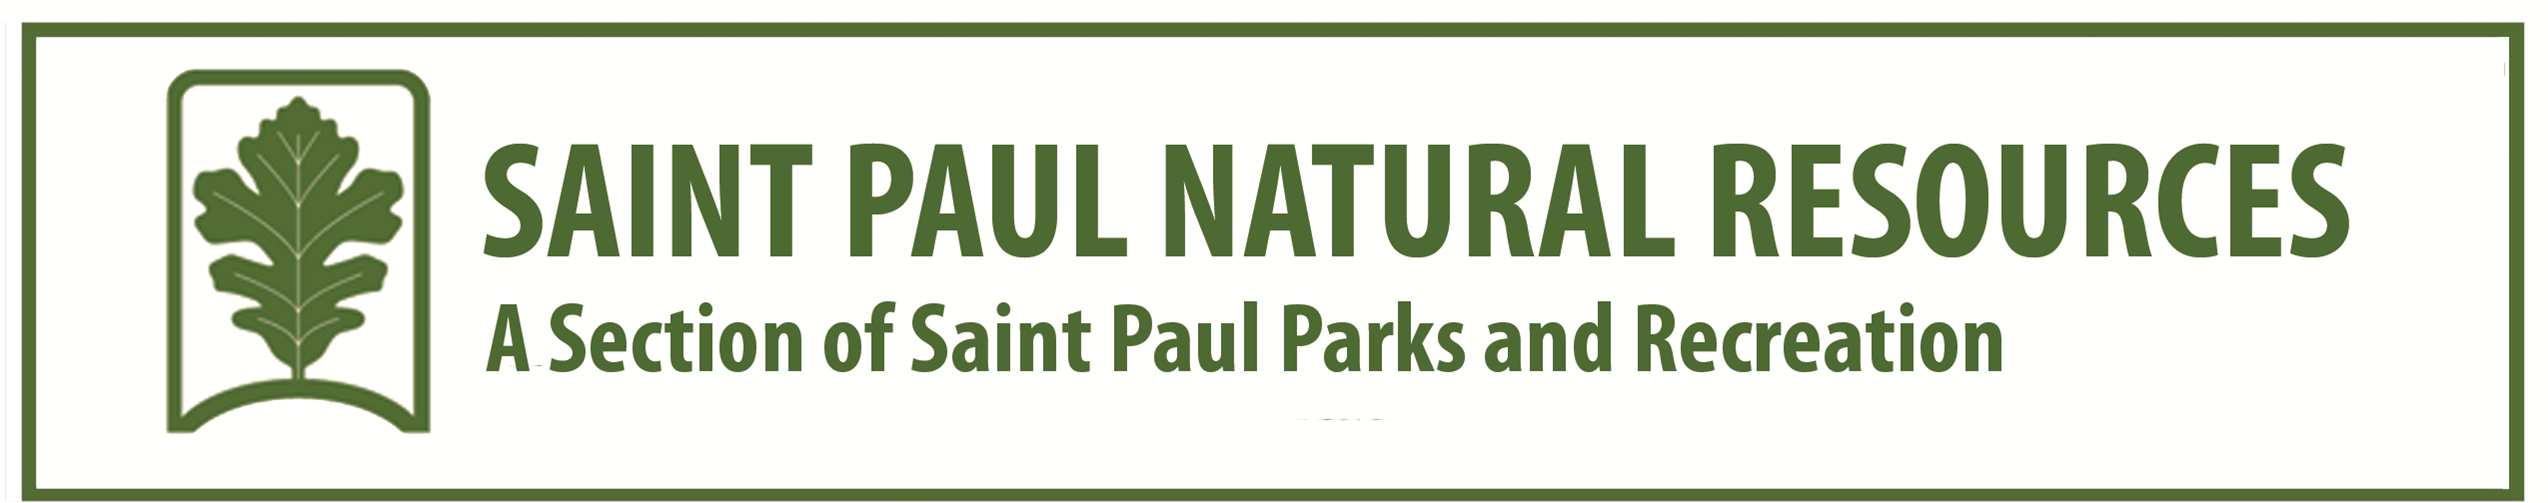 Natural Resources Logo 2